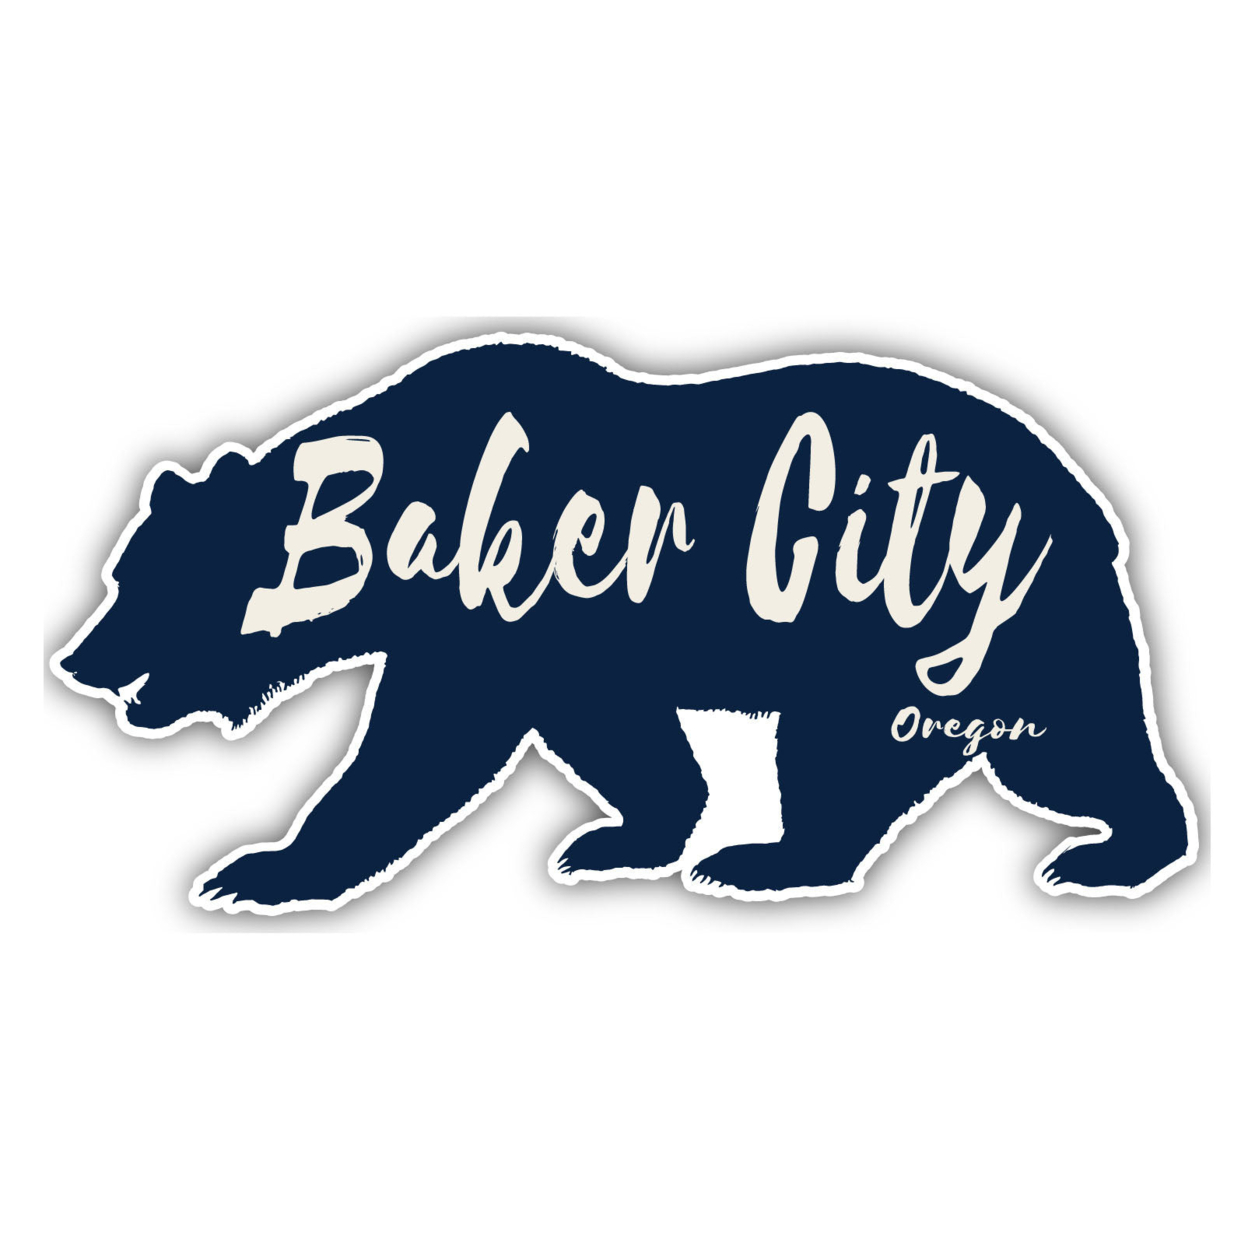 Baker City Oregon Souvenir Decorative Stickers (Choose Theme And Size) - 4-Pack, 4-Inch, Tent